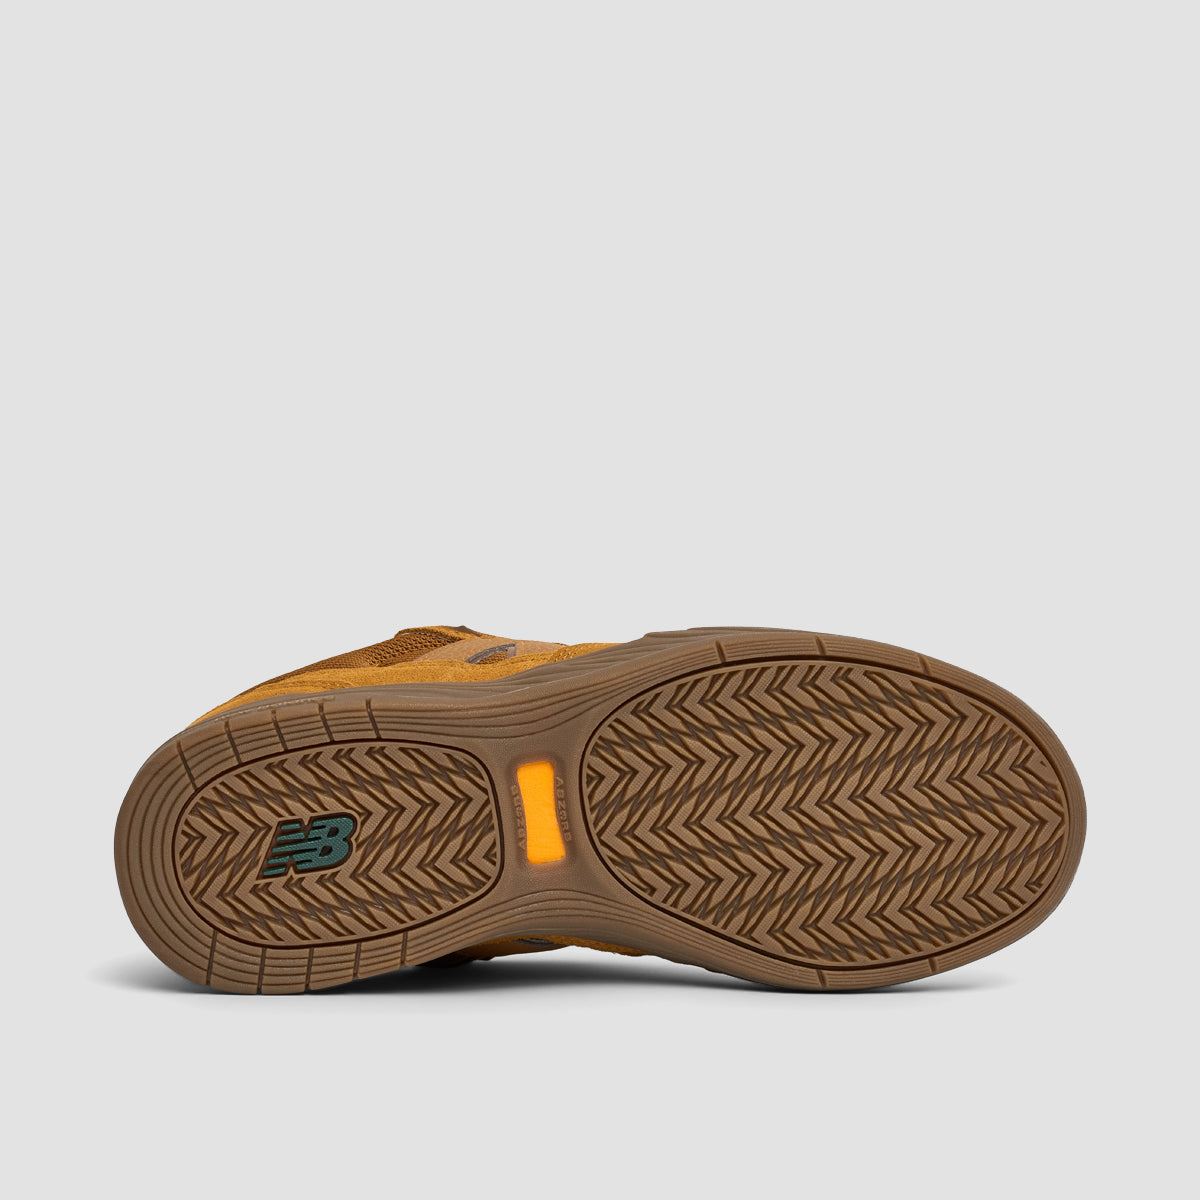 New Balance Numeric Tiago Lemos 808 V1 Shoes - Wheat/Brown